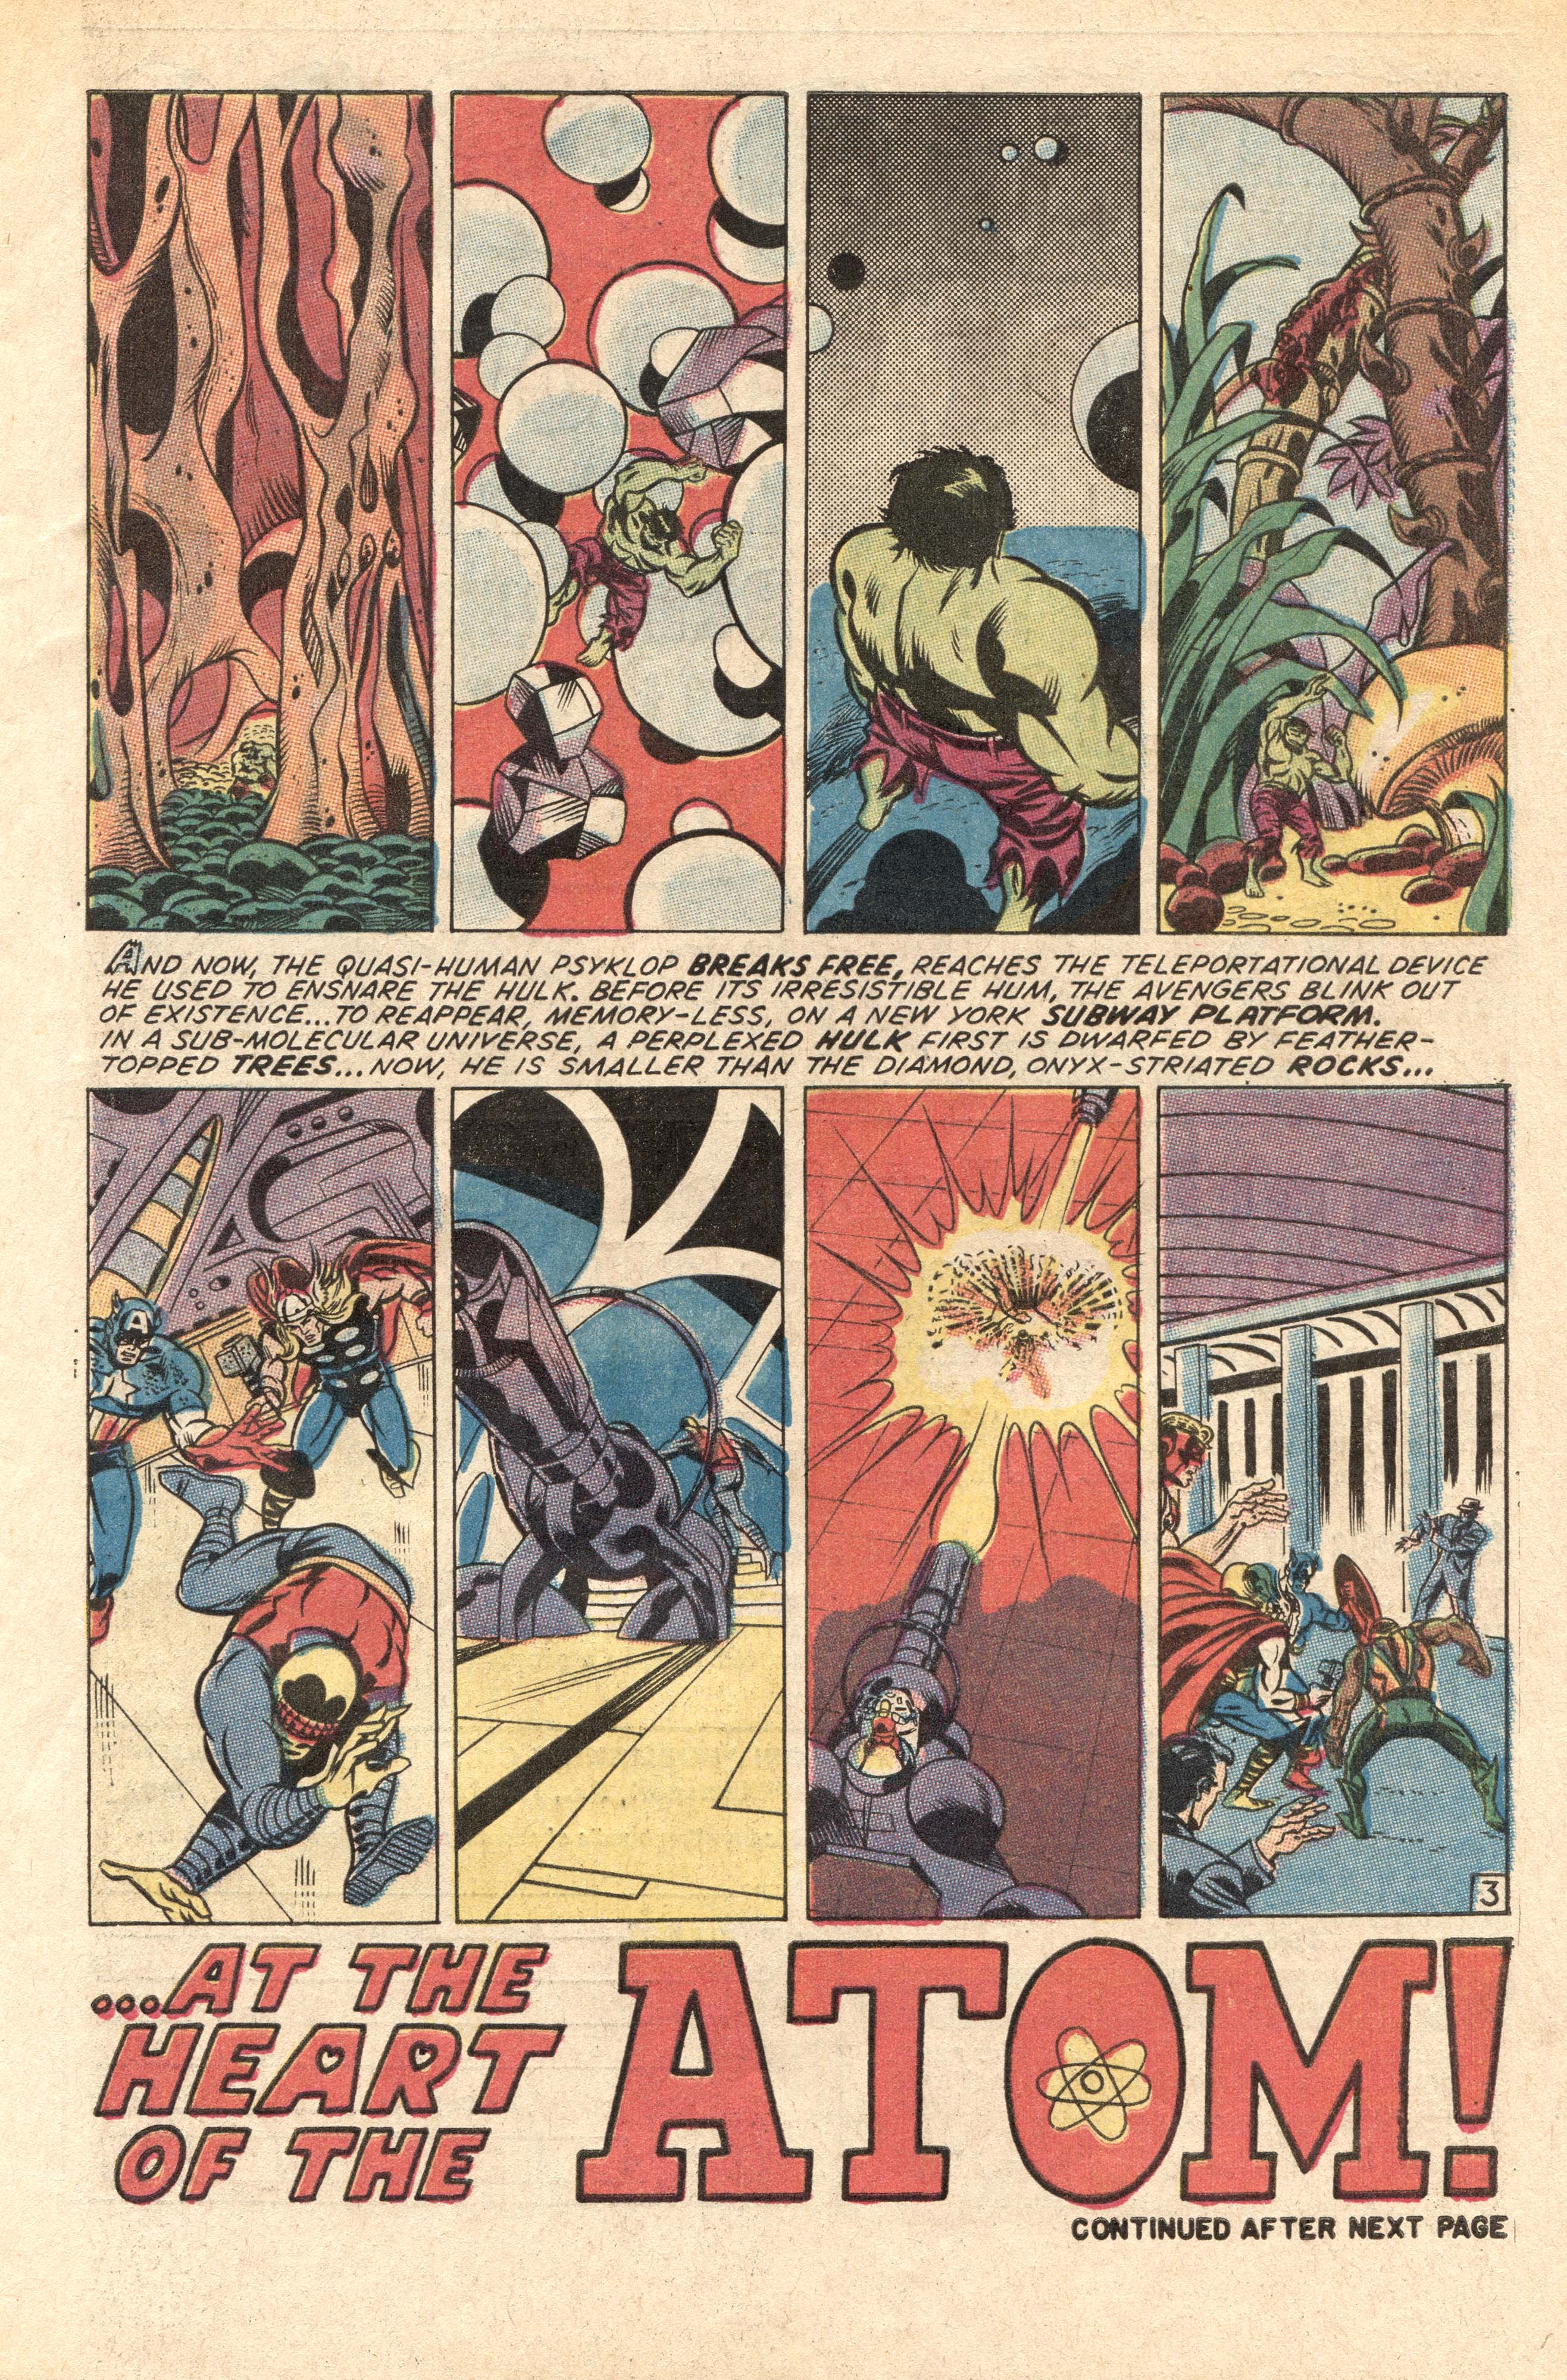 Incredible Hulk 140, p3, art by Herb Trimpe and Sam Grainger